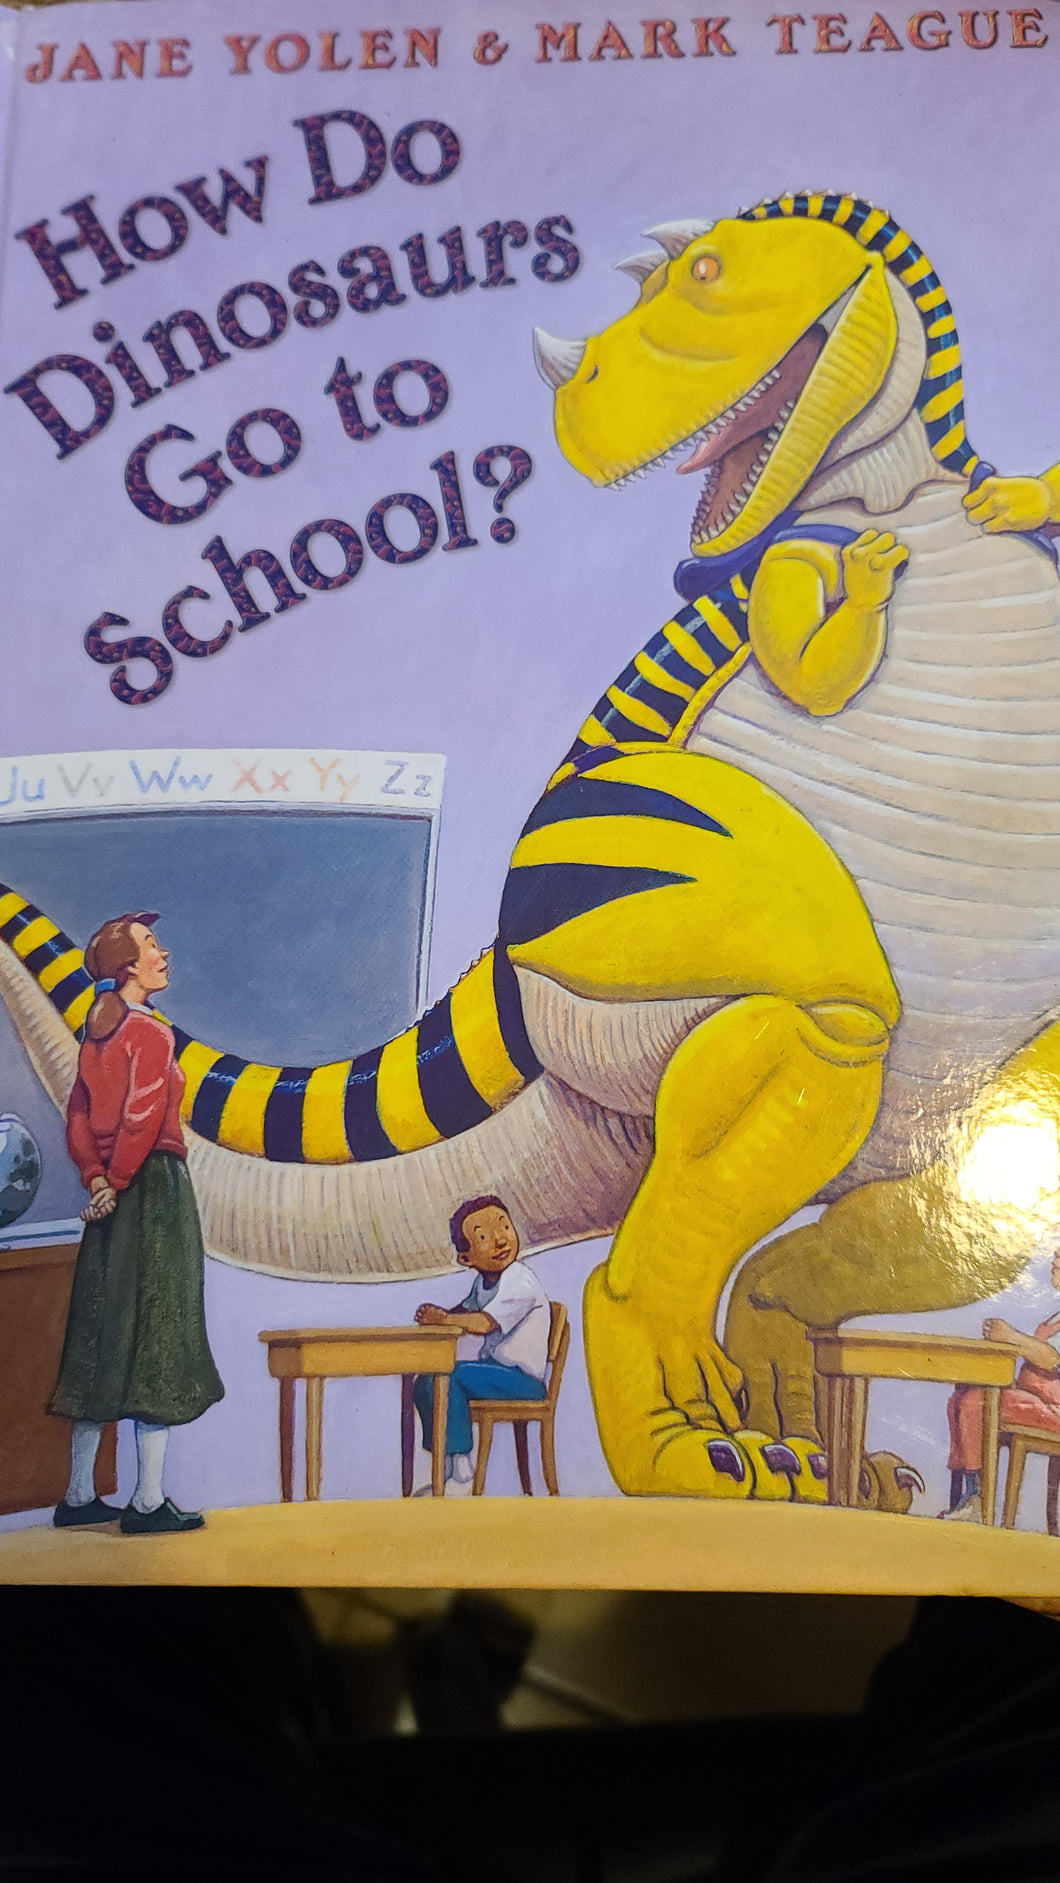 How do Dinosaurs Go to School